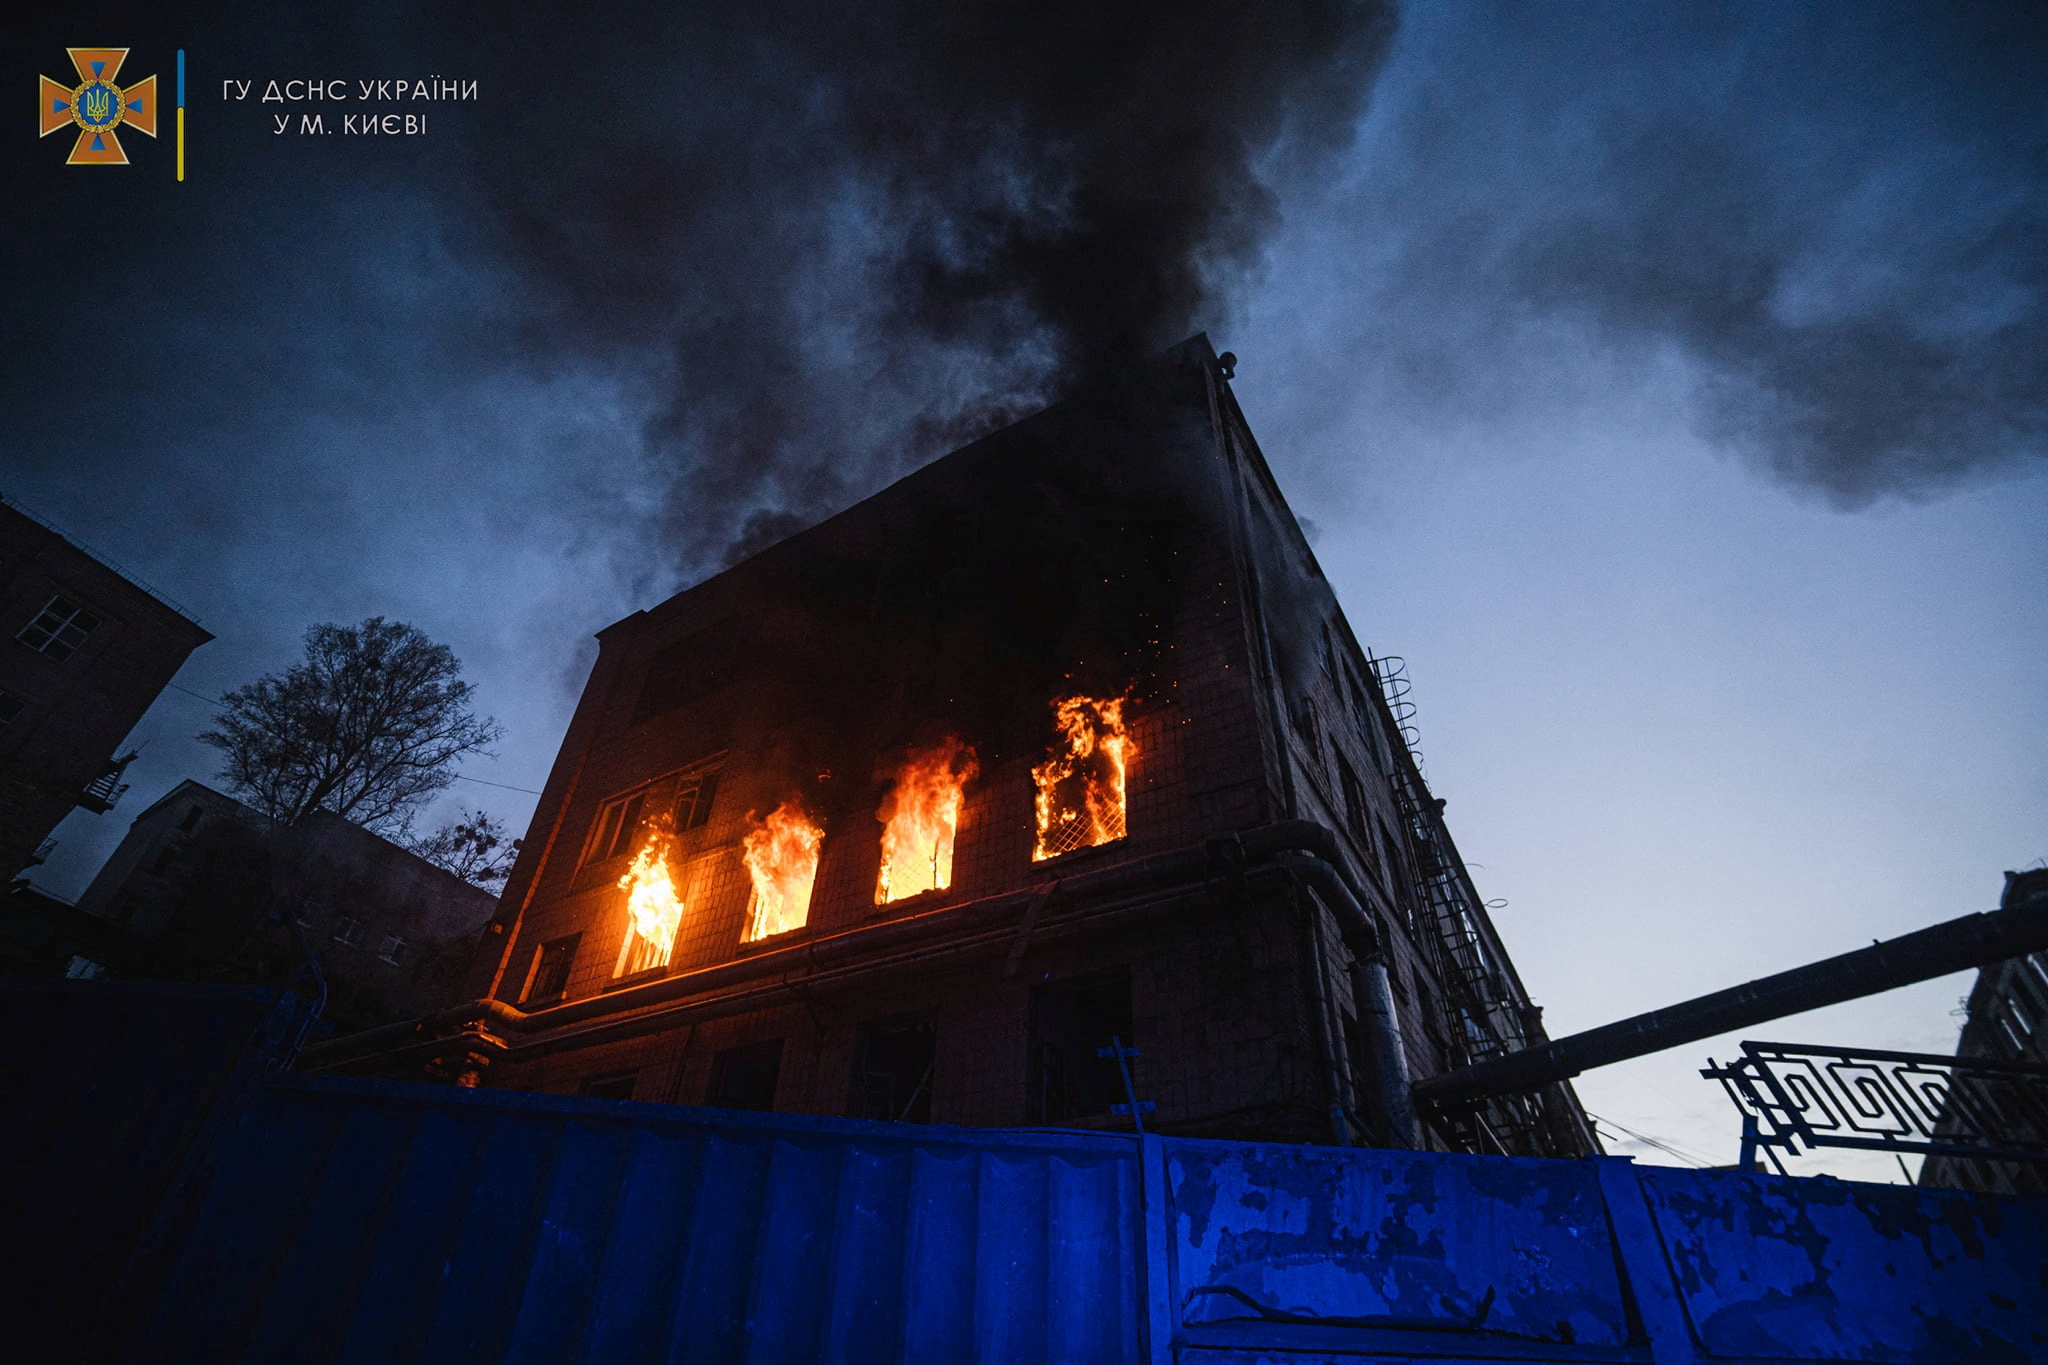 Russia-Ukraine War: 20 civilians evacuated from besieged steel plant in Mariupol, Russia says Ukraine shells its own civilians